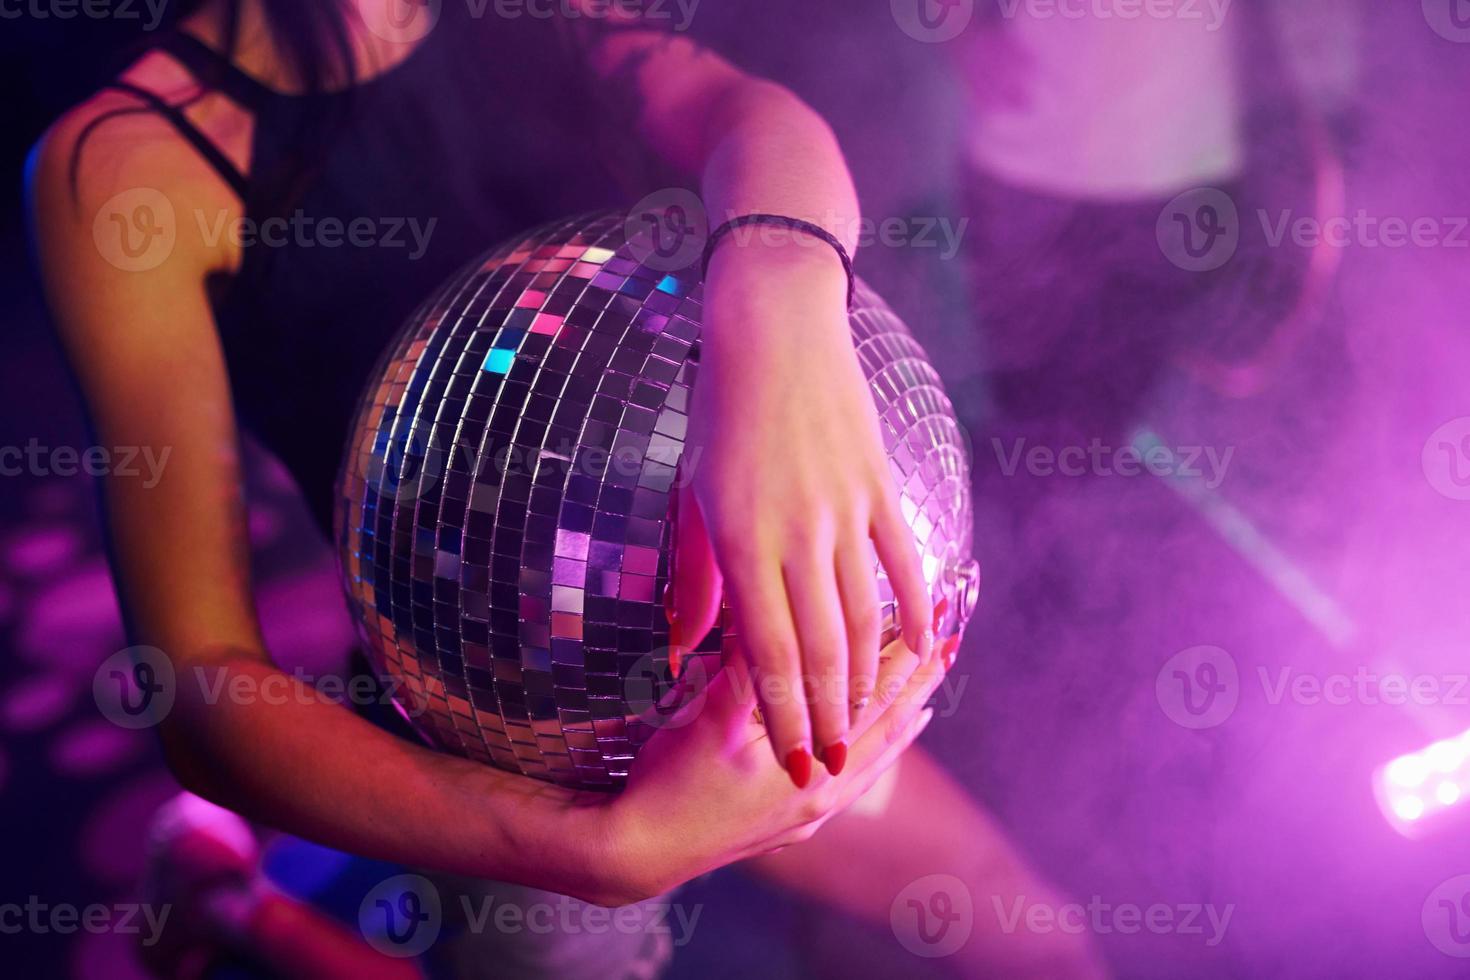 meisje zittend binnen van nacht club met partij bal in handen foto